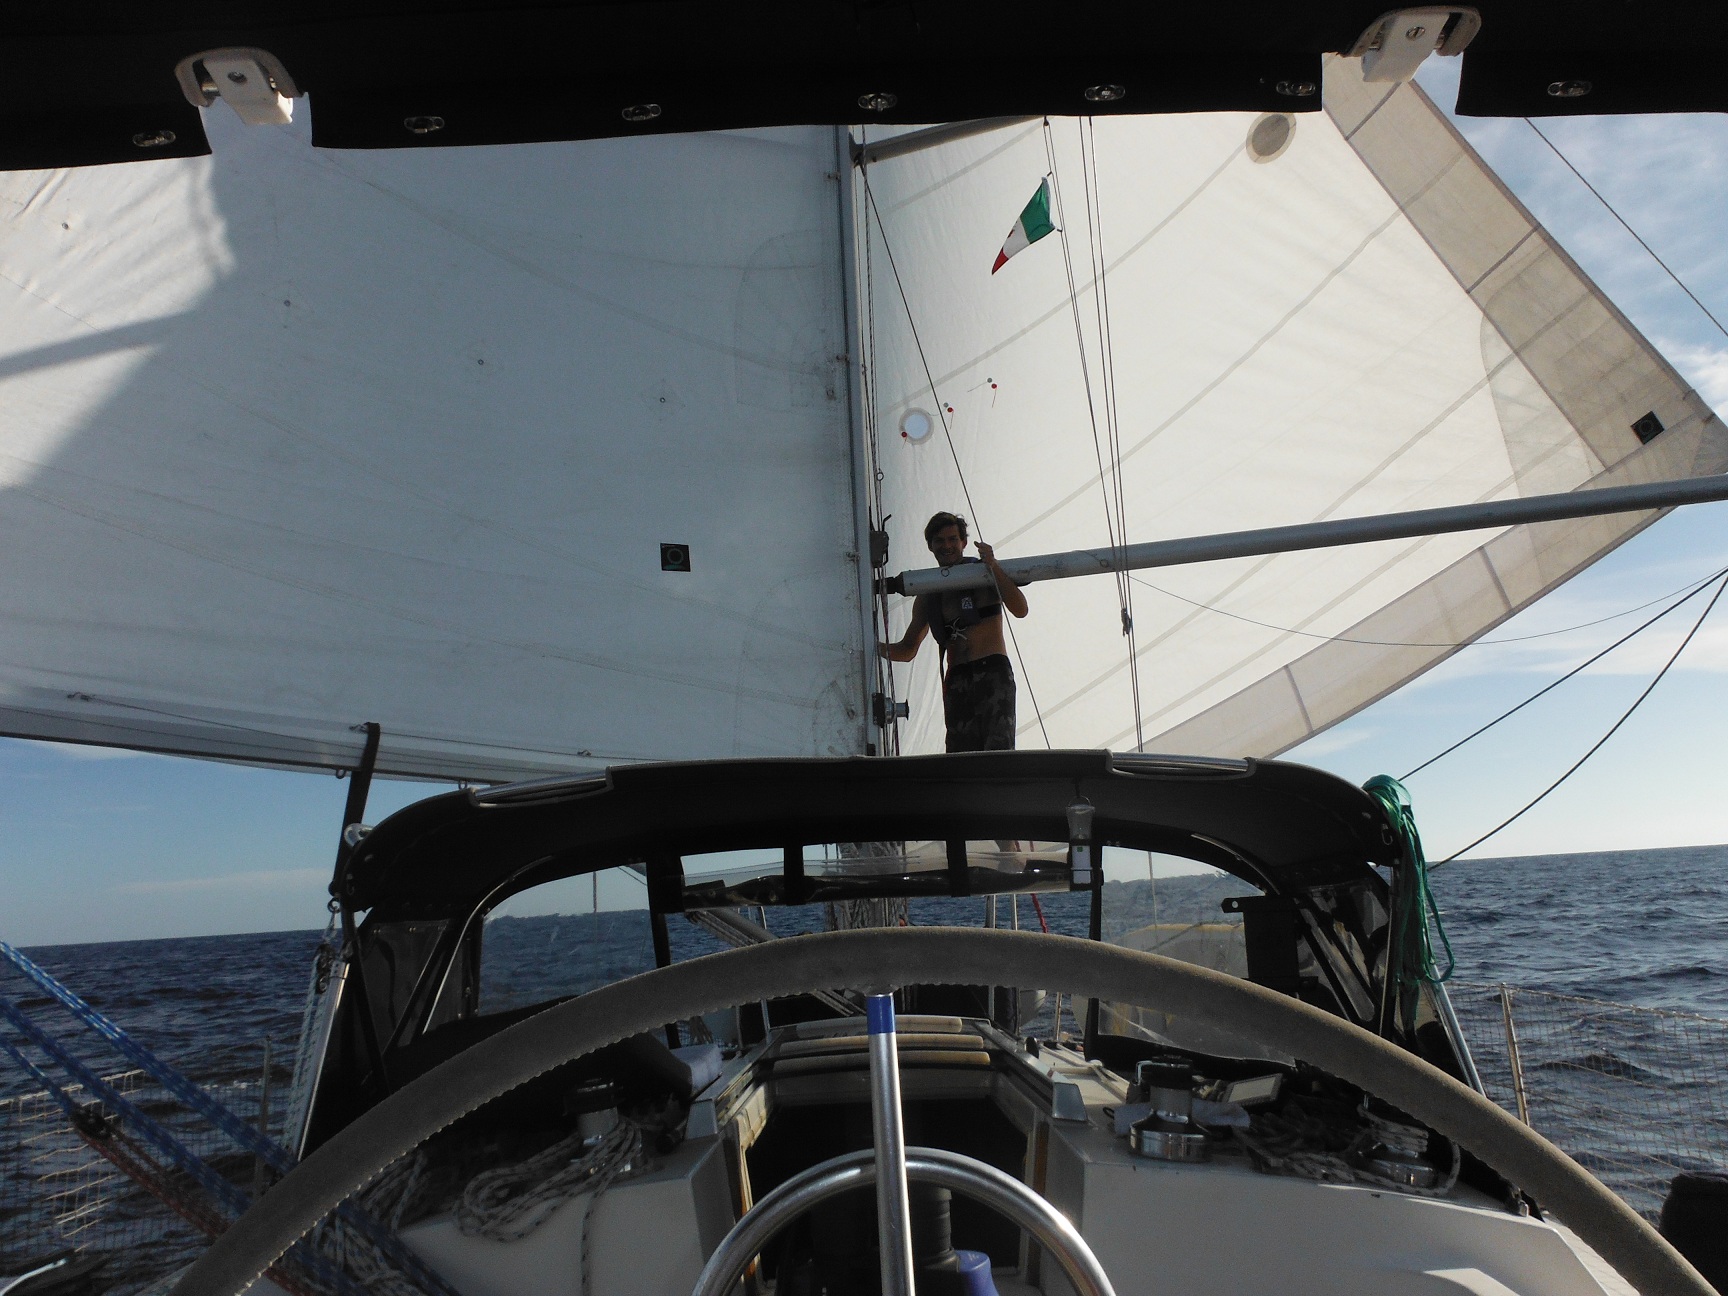 Downwind sailplan